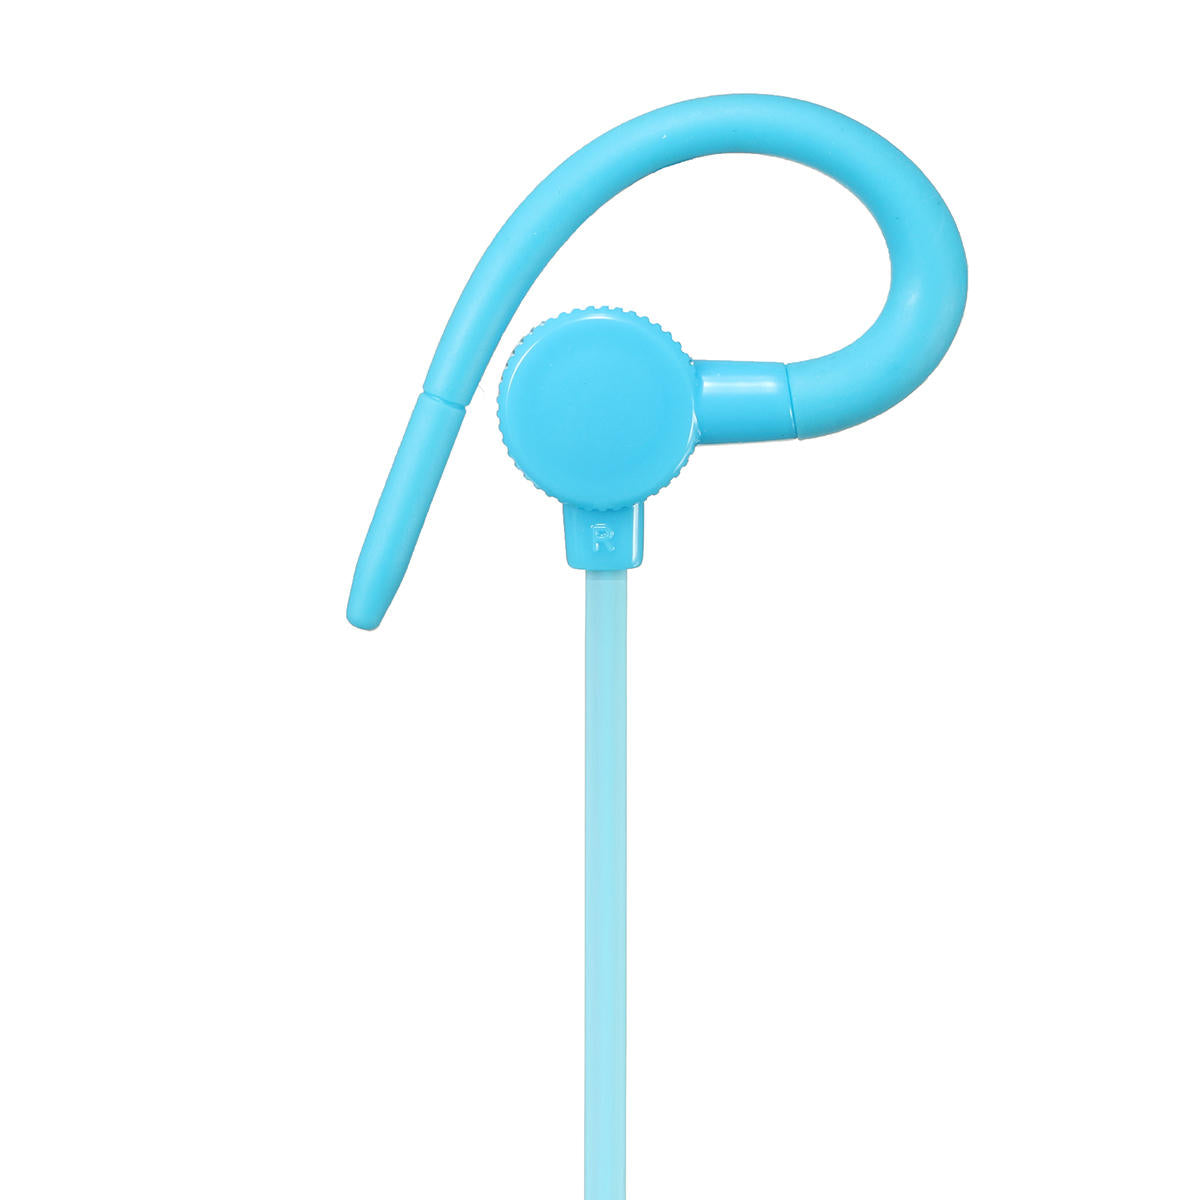 STN-800 Wireless bluetooth Hands-free Headset Headphone